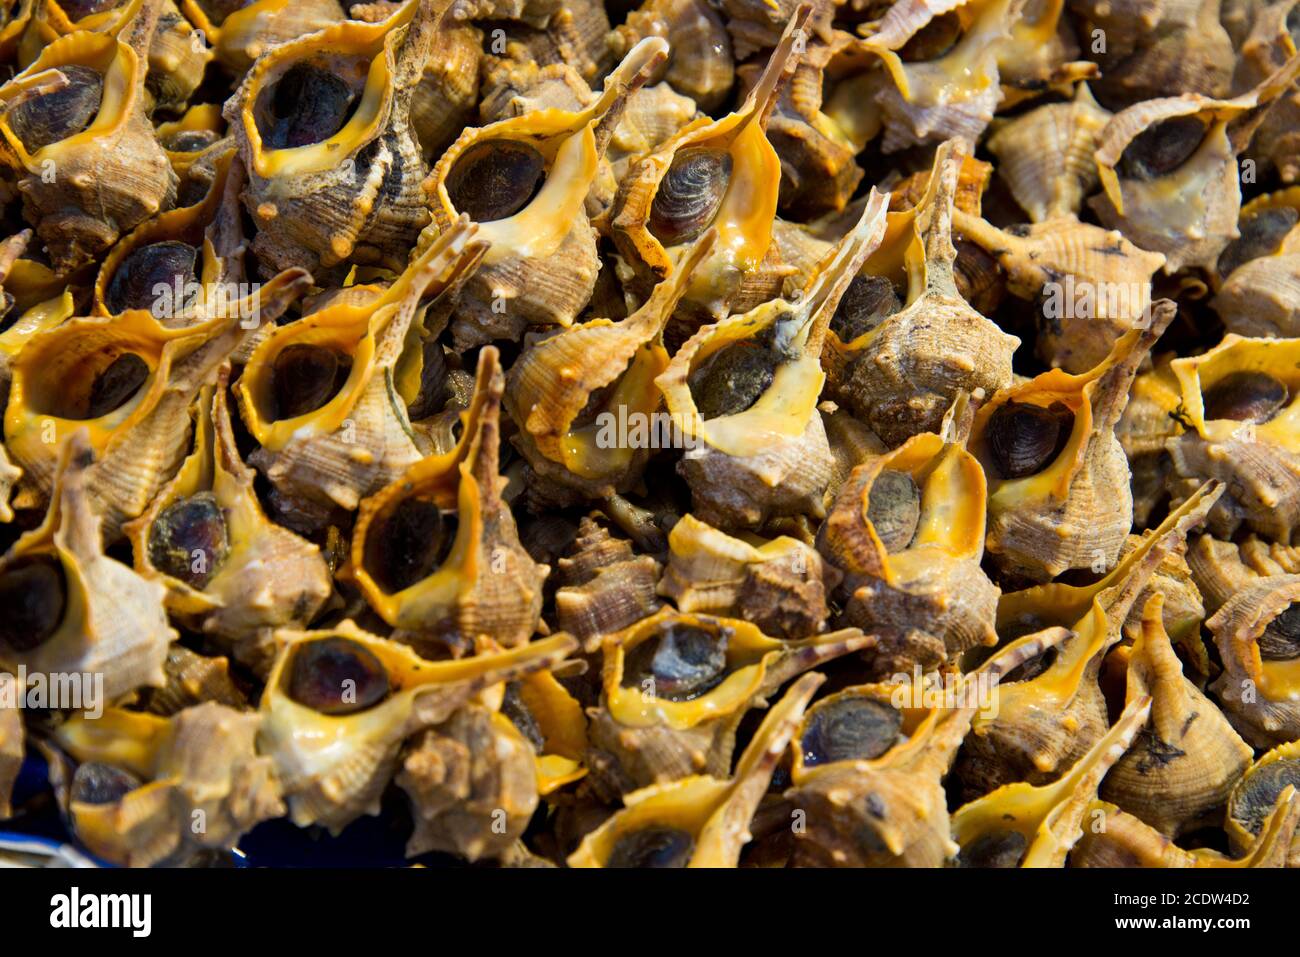 Bolinus brandaris sea snails on market Stock Photo